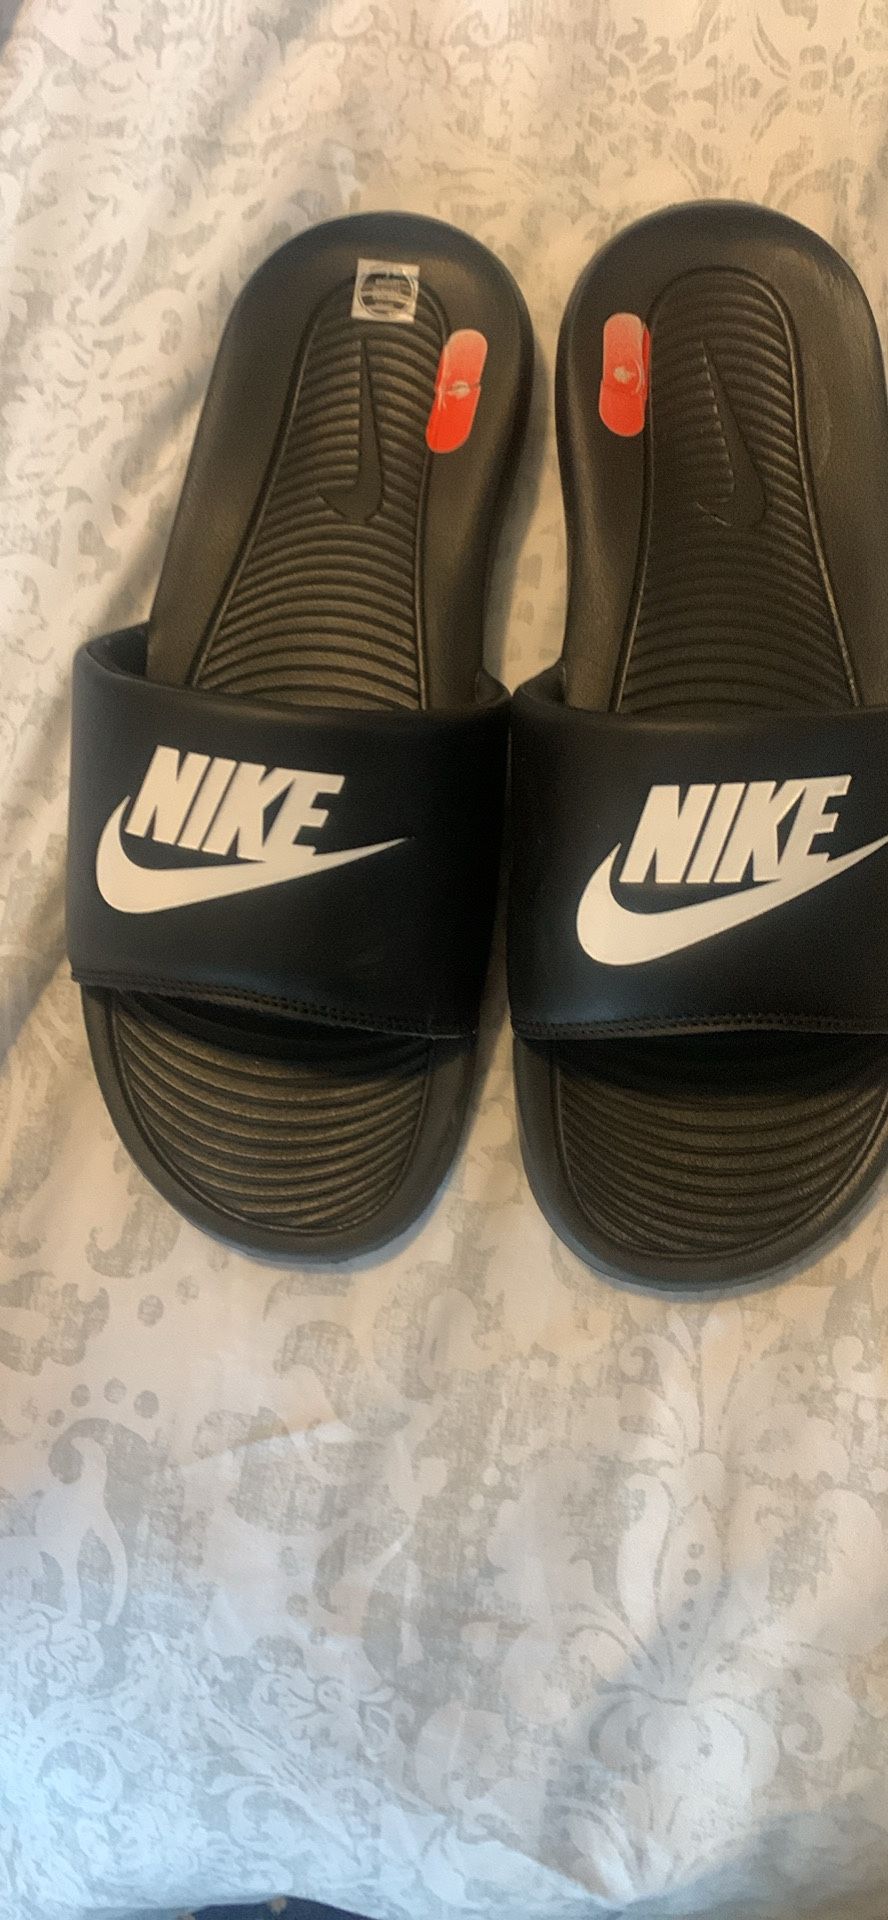 Nike Slides Size 11